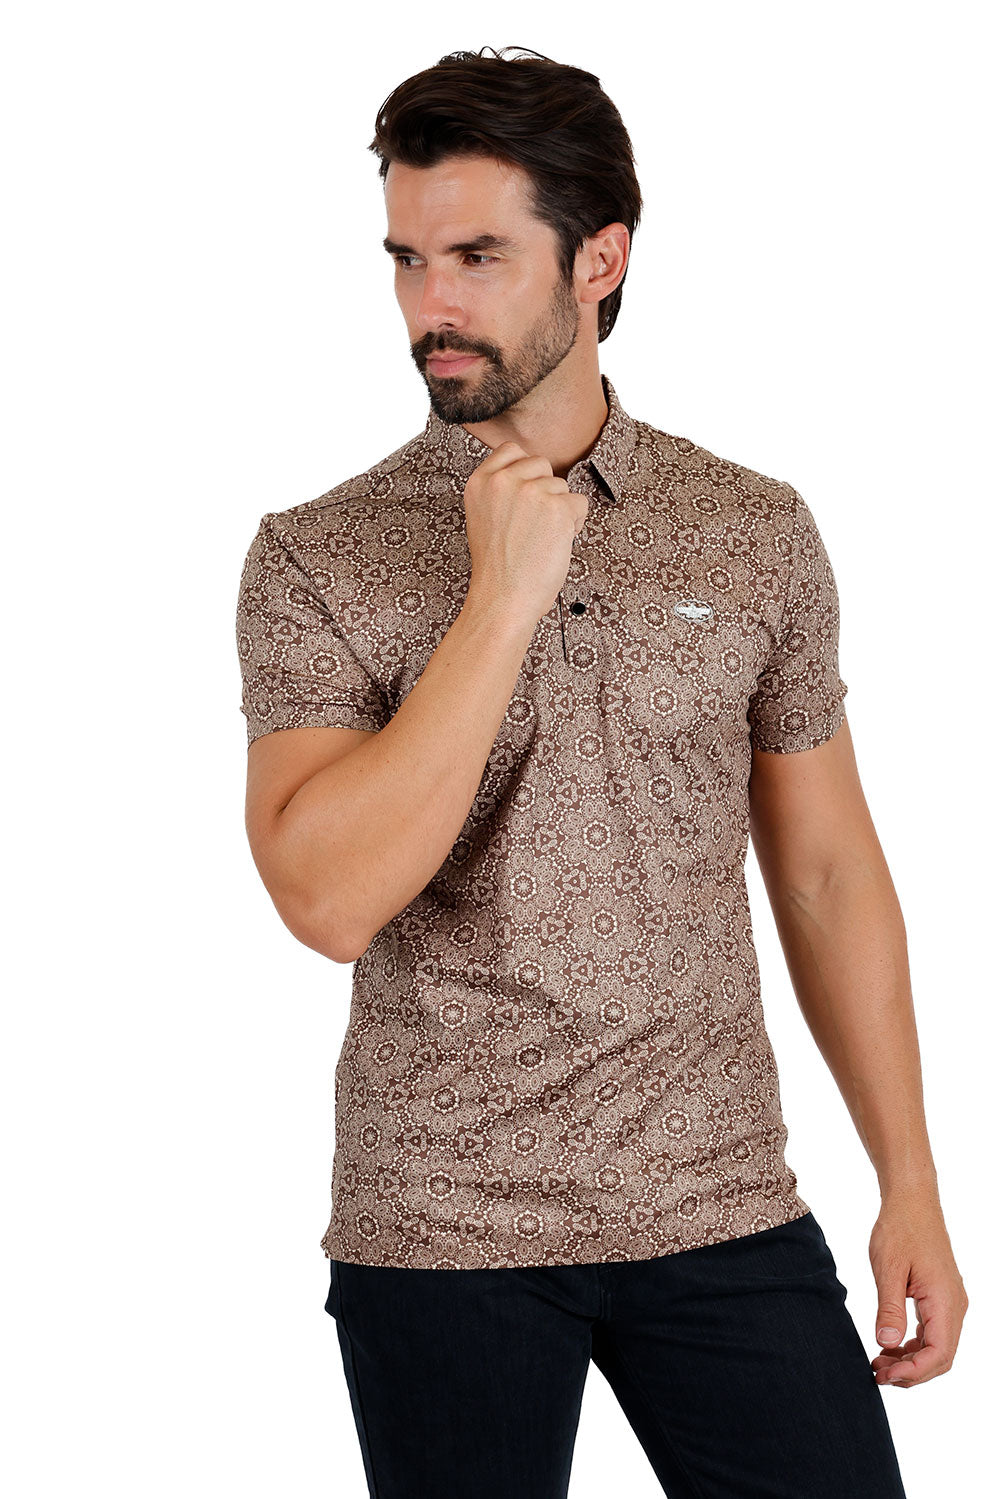 Barabas Men's Geometric Floral Shiny Short Sleeve Polo Shirts 3P08 Brown Cream